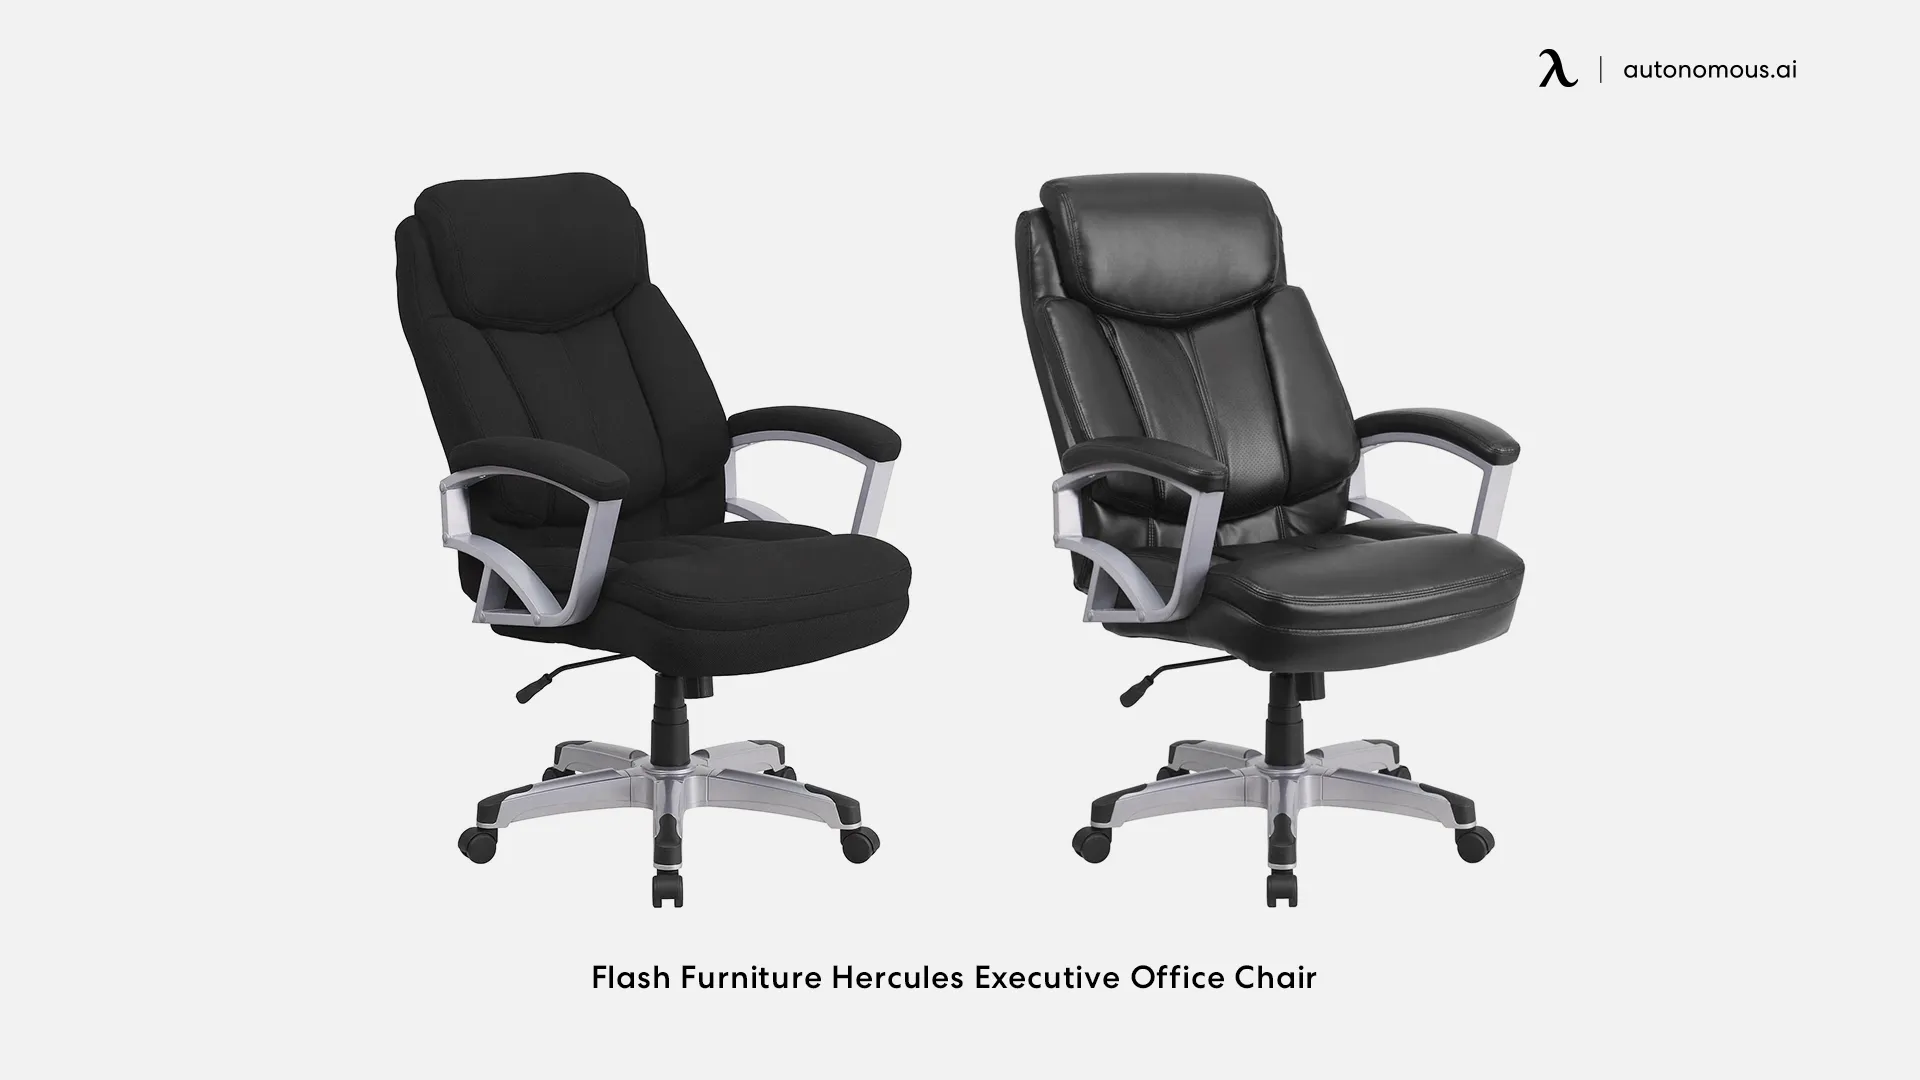 Flash Furniture Hercules Executive Office Chair